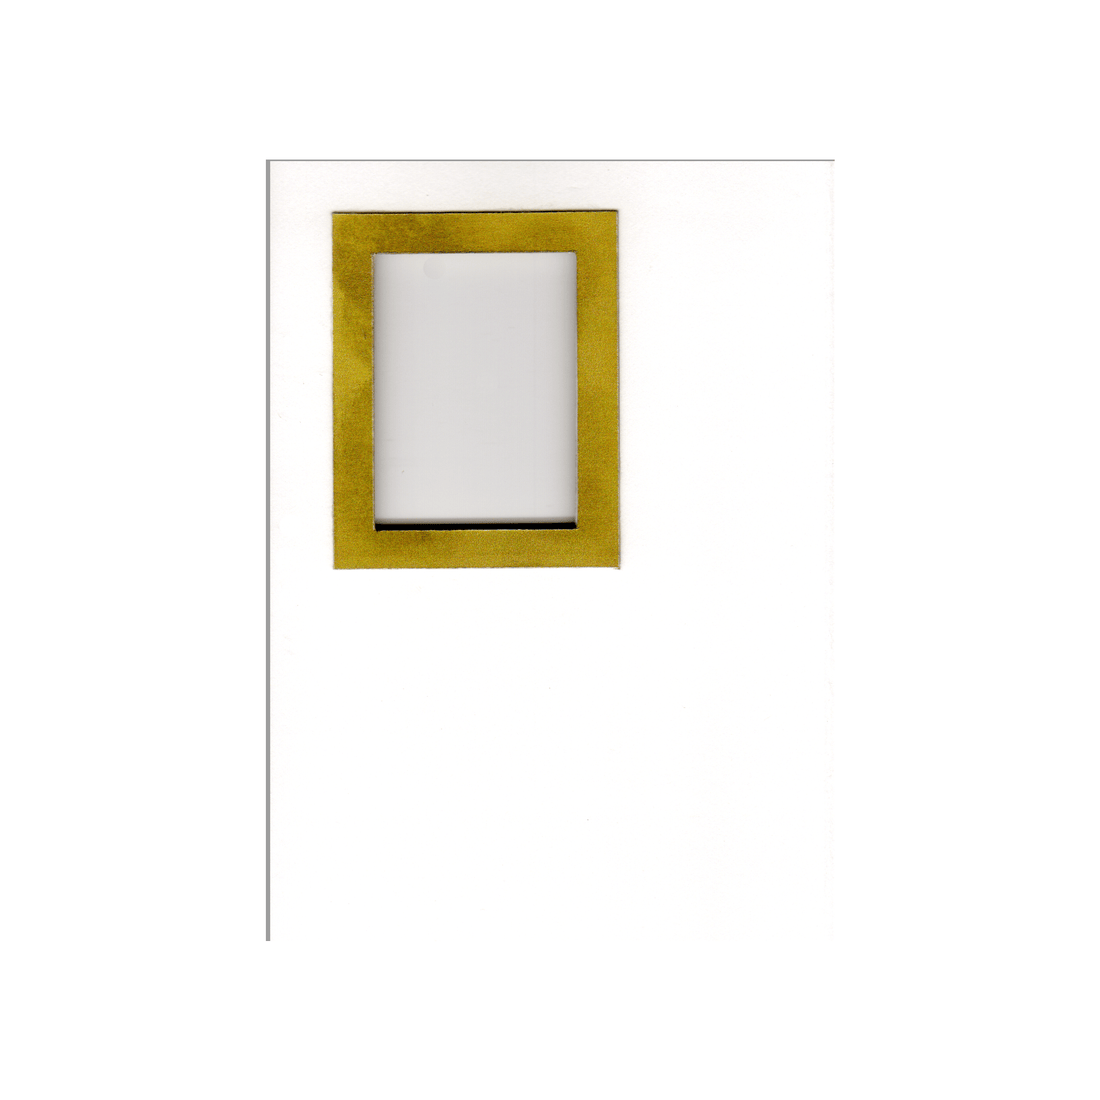 left hand inside of card showing window frame